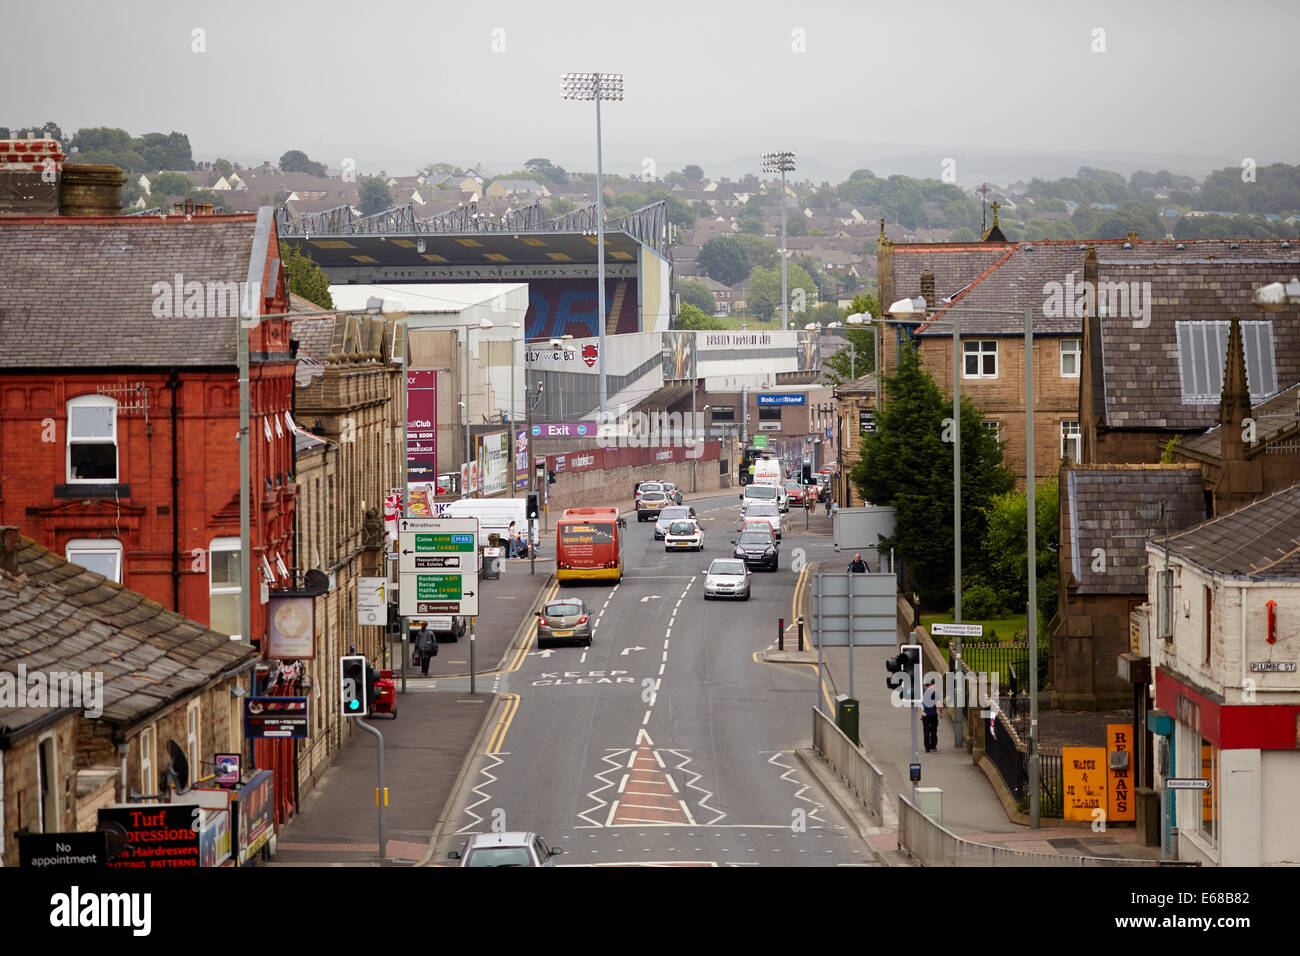 Vista di Turf Moor stadium , home a Burnley FC da Leeds Liverpool canal. Foto Stock